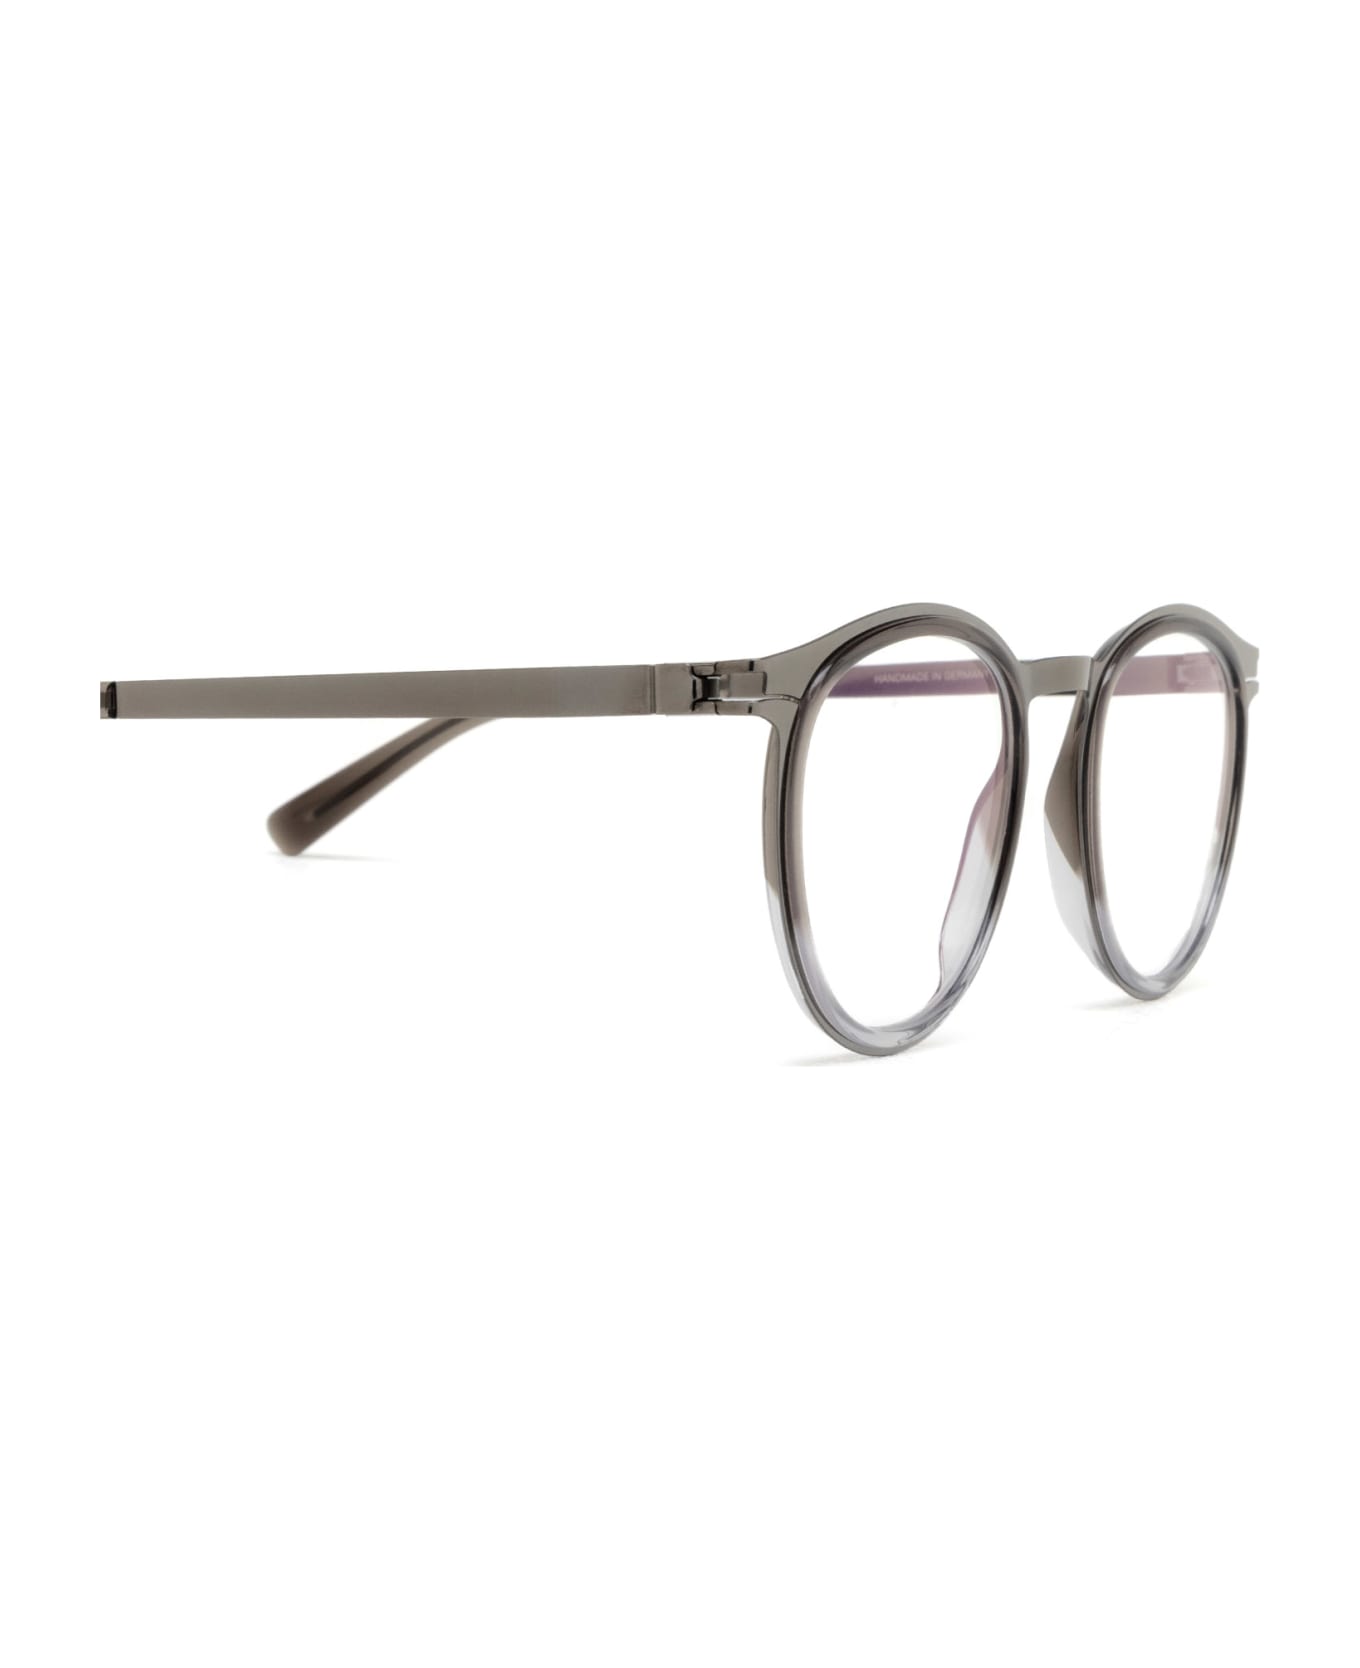 Mykita Siwa A54 Shiny Graphite/grey Gradie Glasses - A54 Shiny Graphite/Grey Gradie